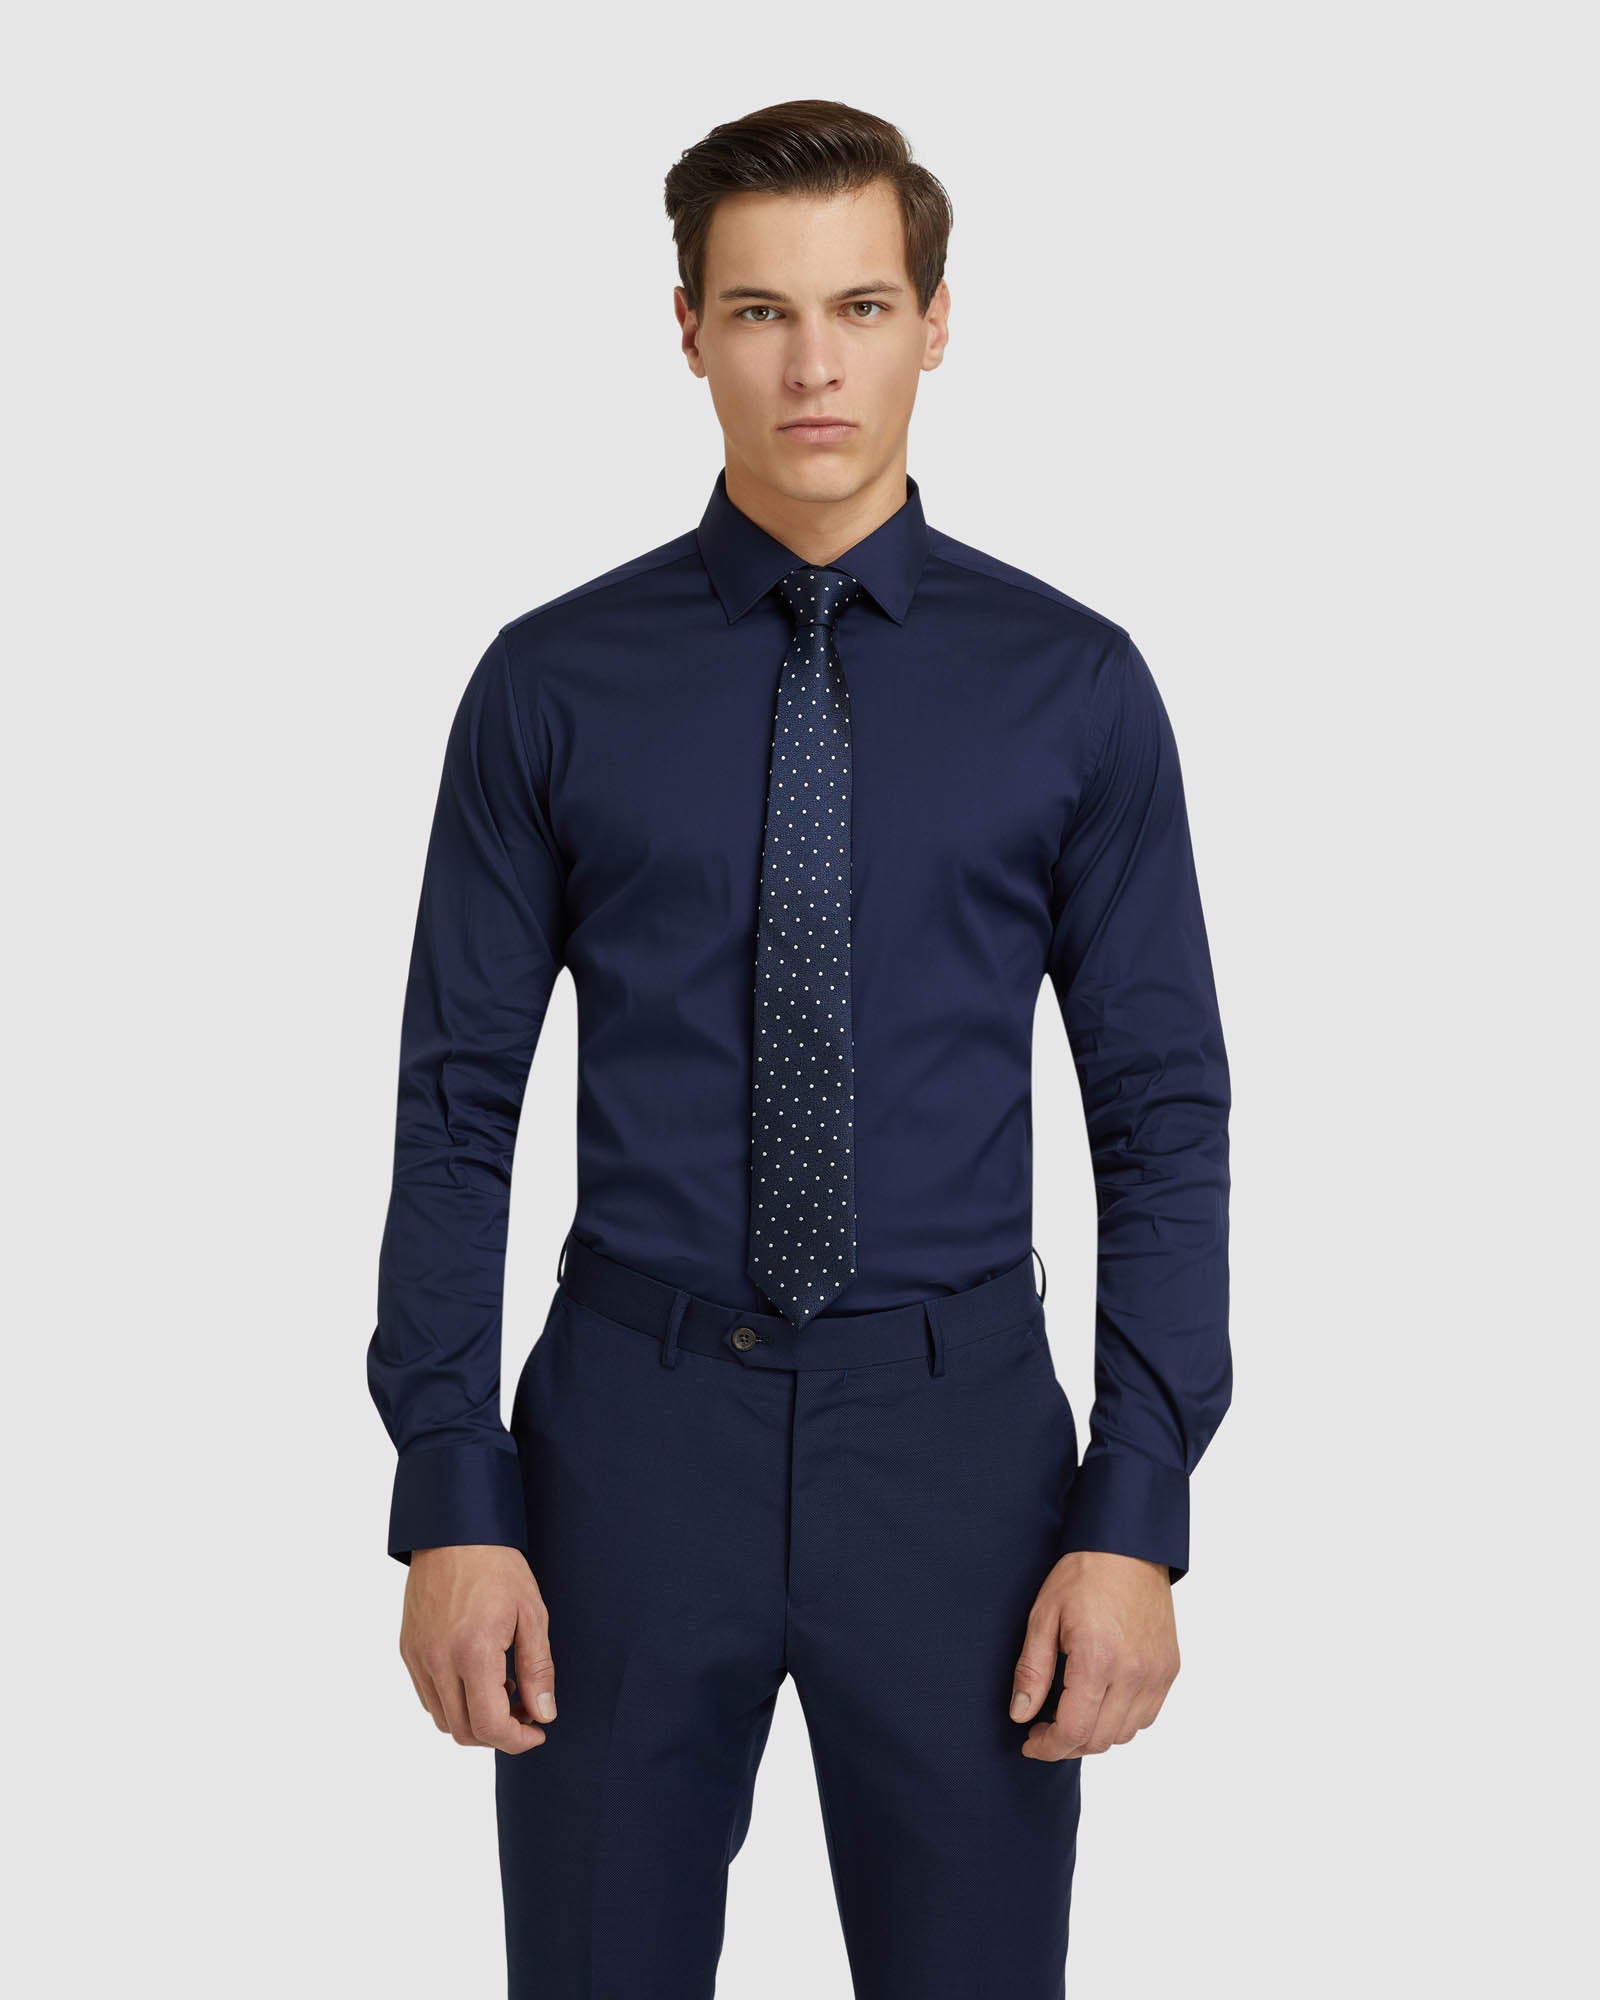 Men's White and Blue Vertical Striped Dress Shirt, Navy Dress Pants, Navy  Wool Tie, Dark Brown Leather Belt | Lookastic